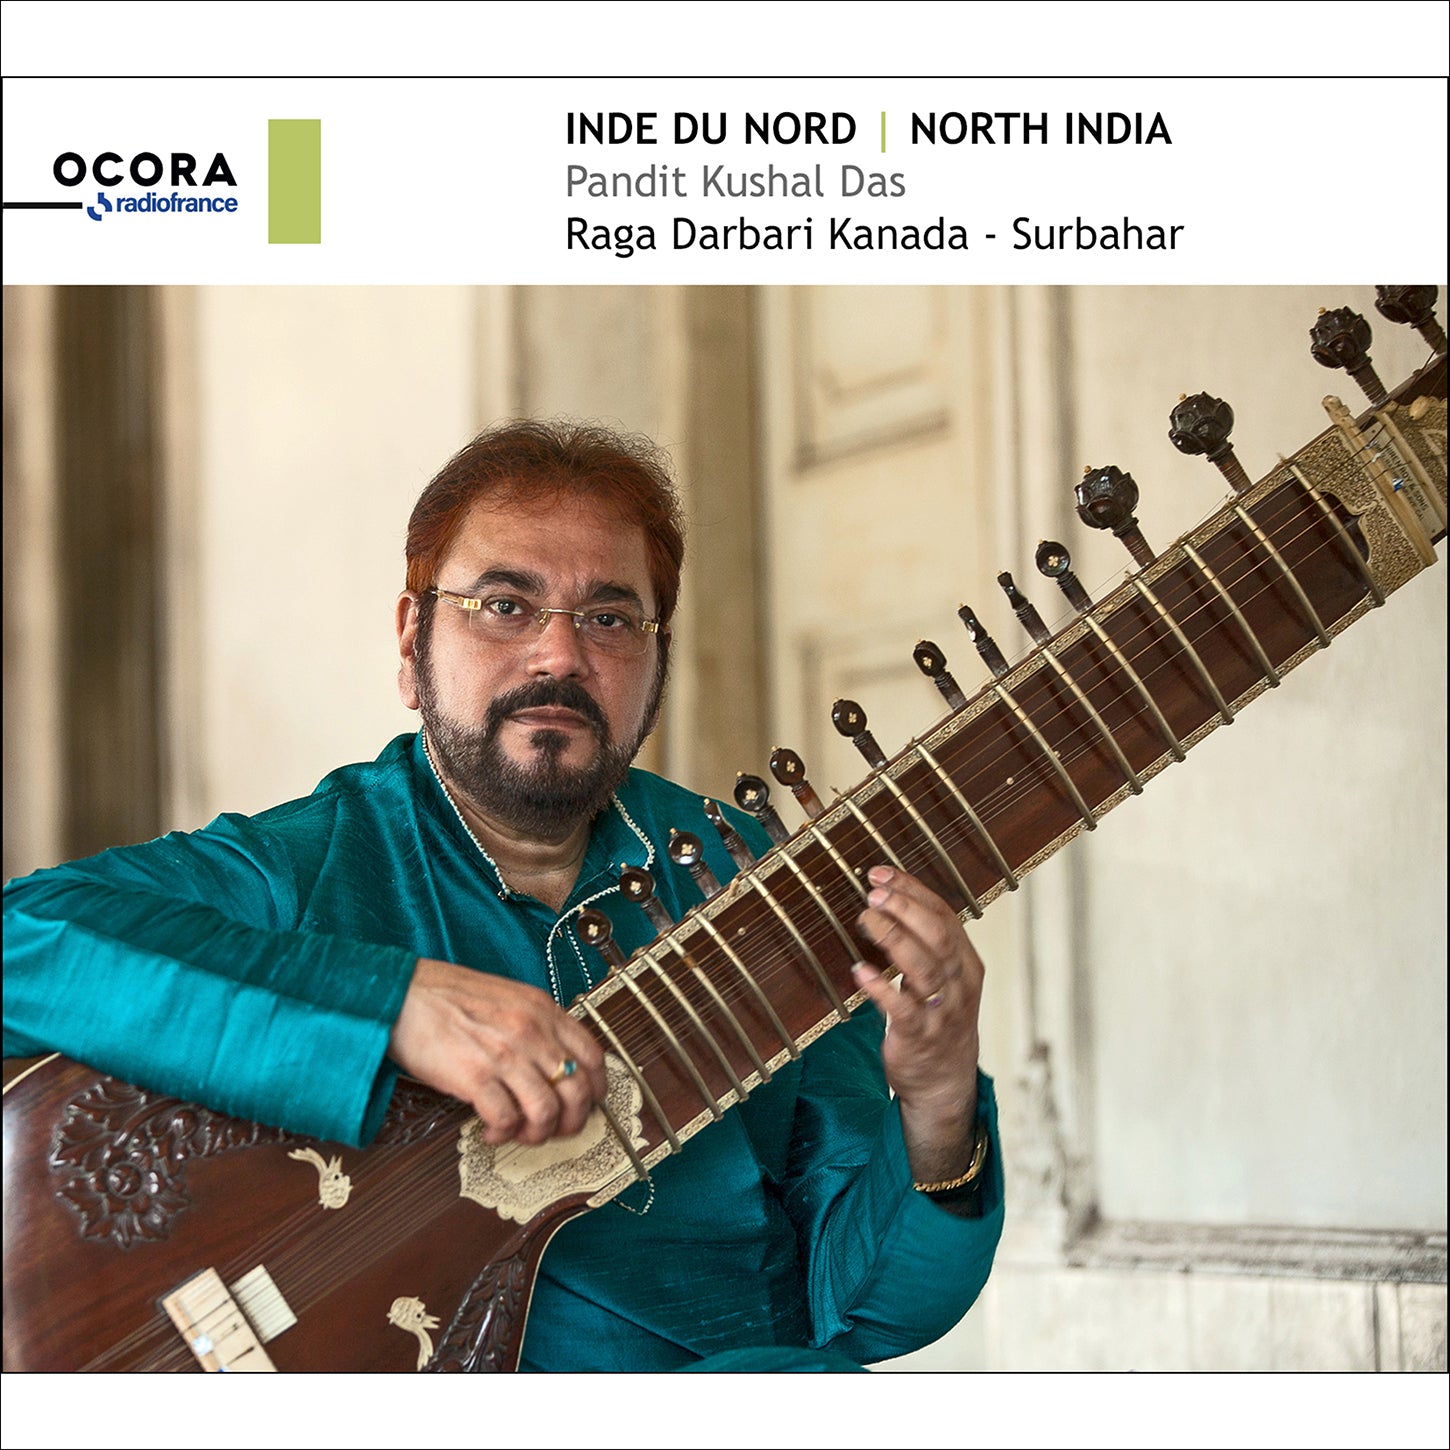 North India - Pandit Kushal Das, Raga Darbari Kanada - Surbahar